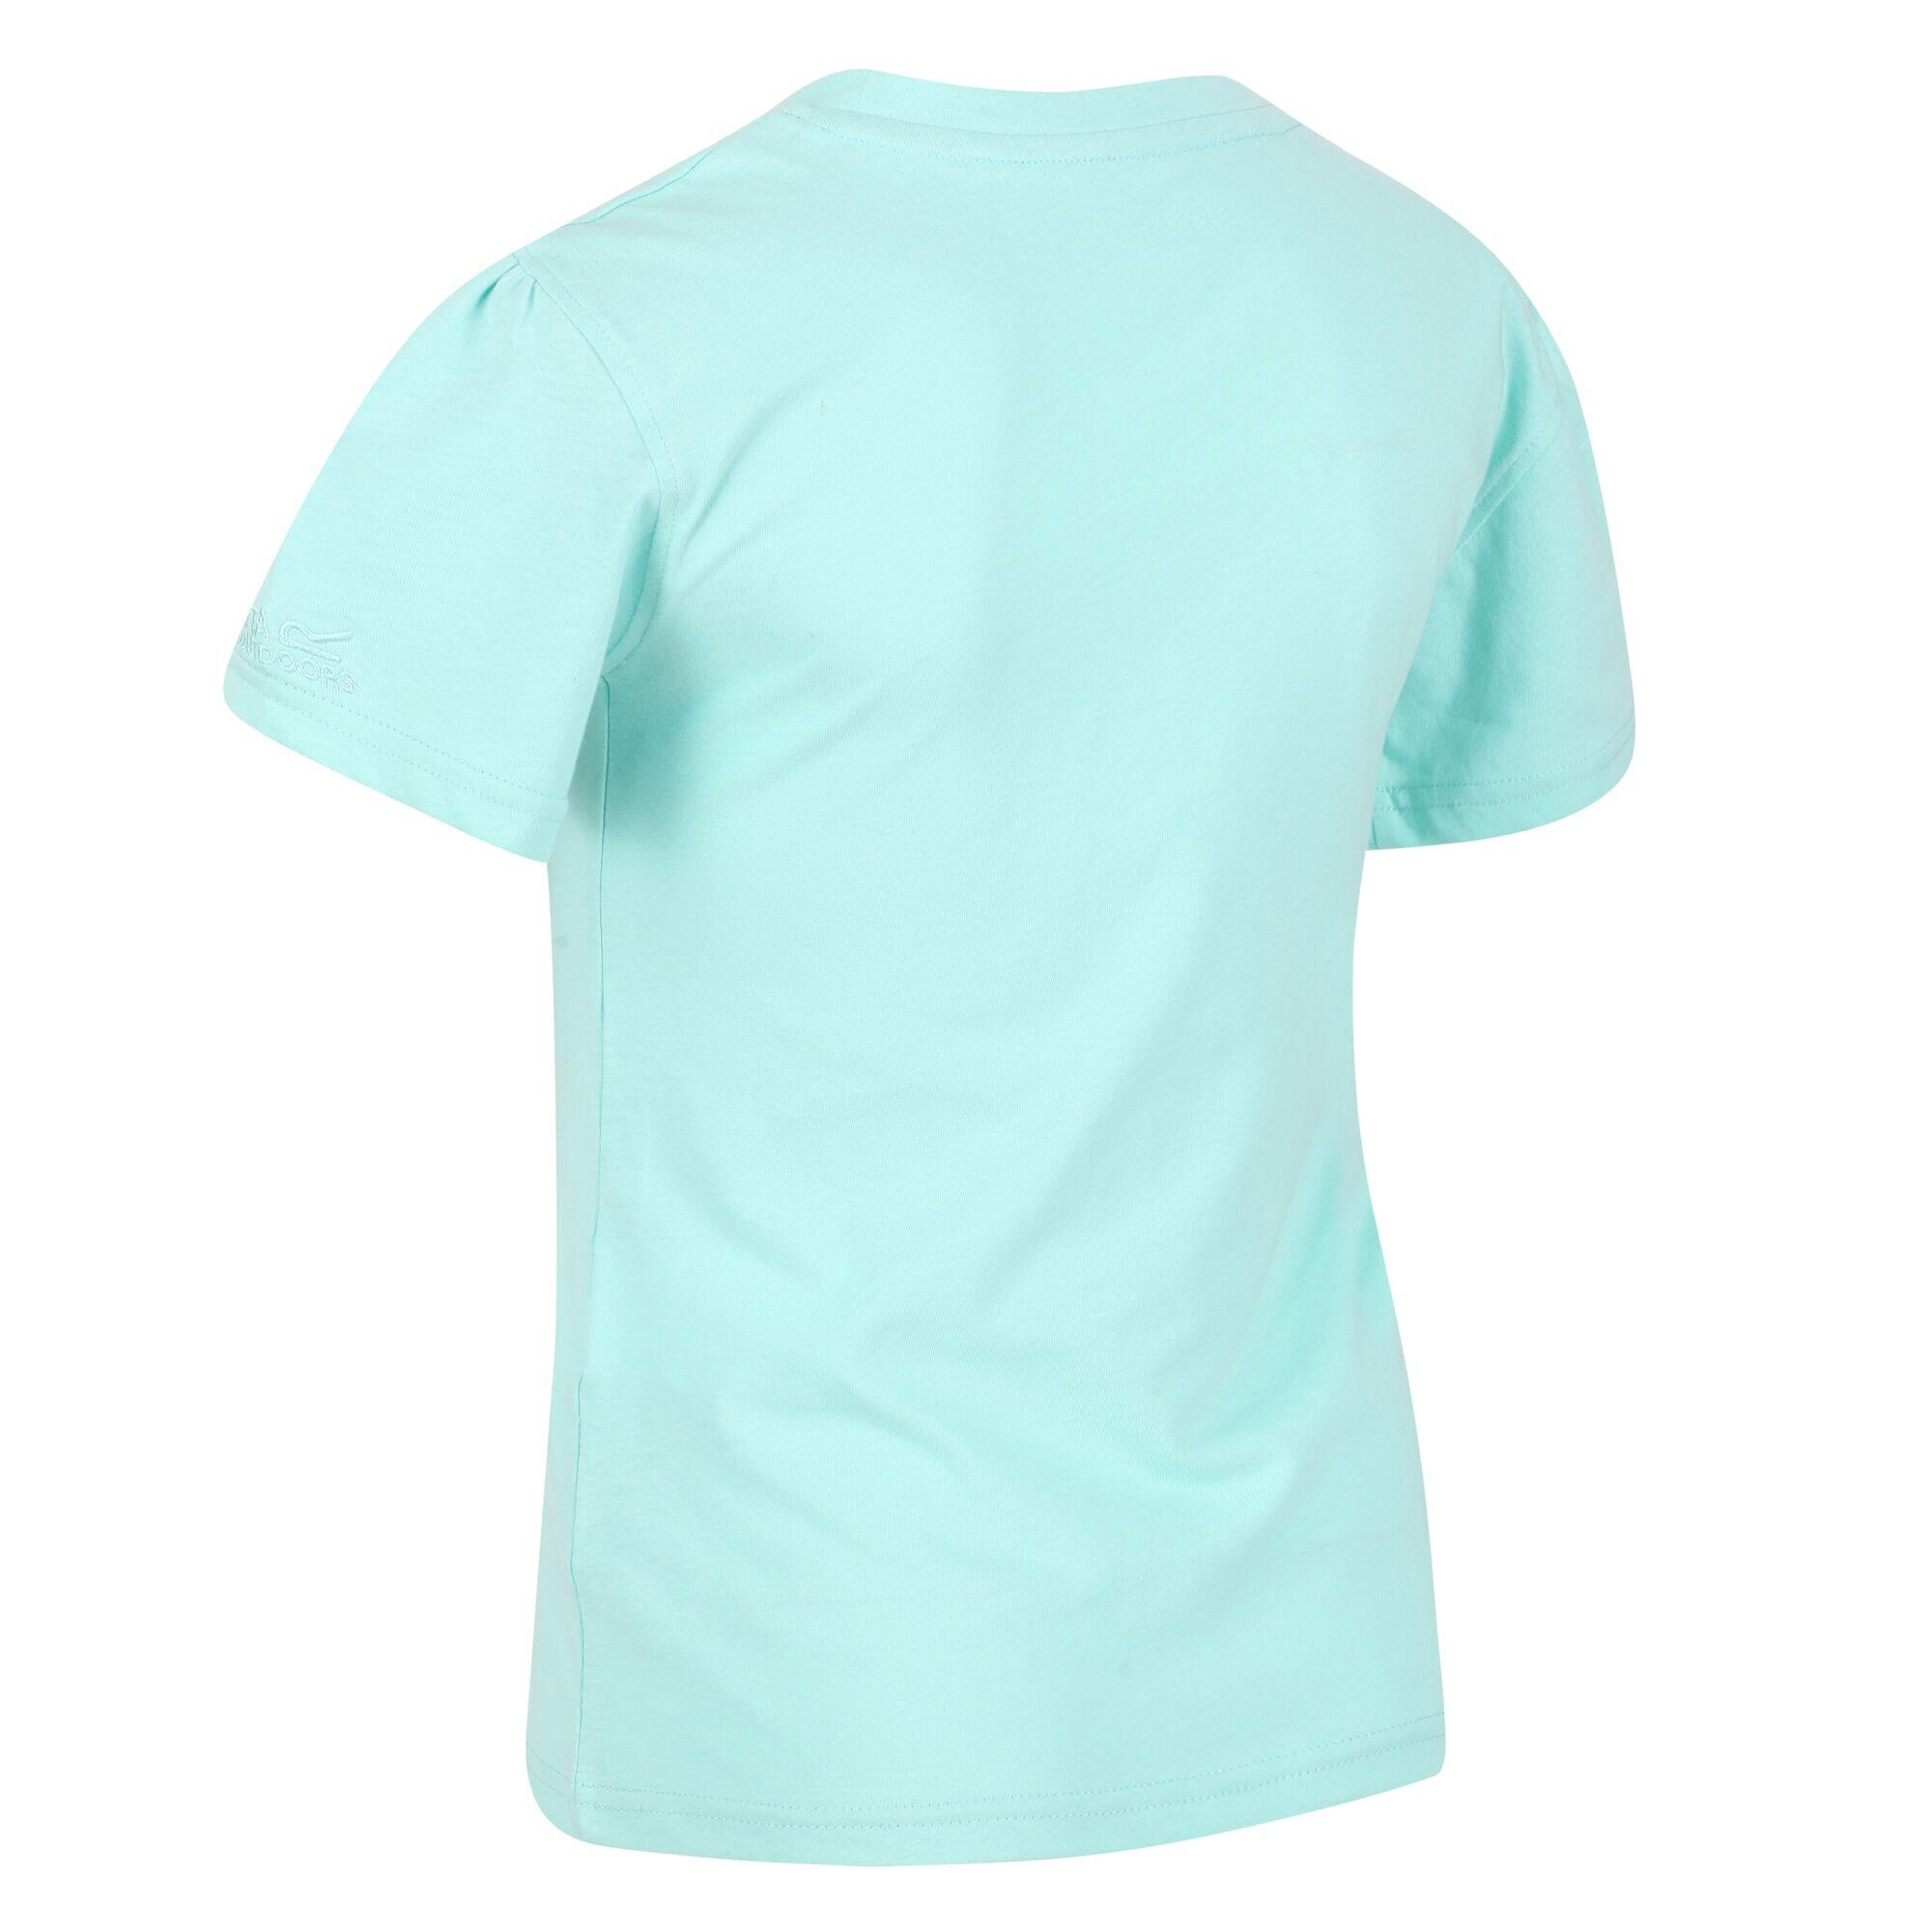 Bosley V Kids Walking Short Sleeve T-Shirt - Aruba Blue 5/5